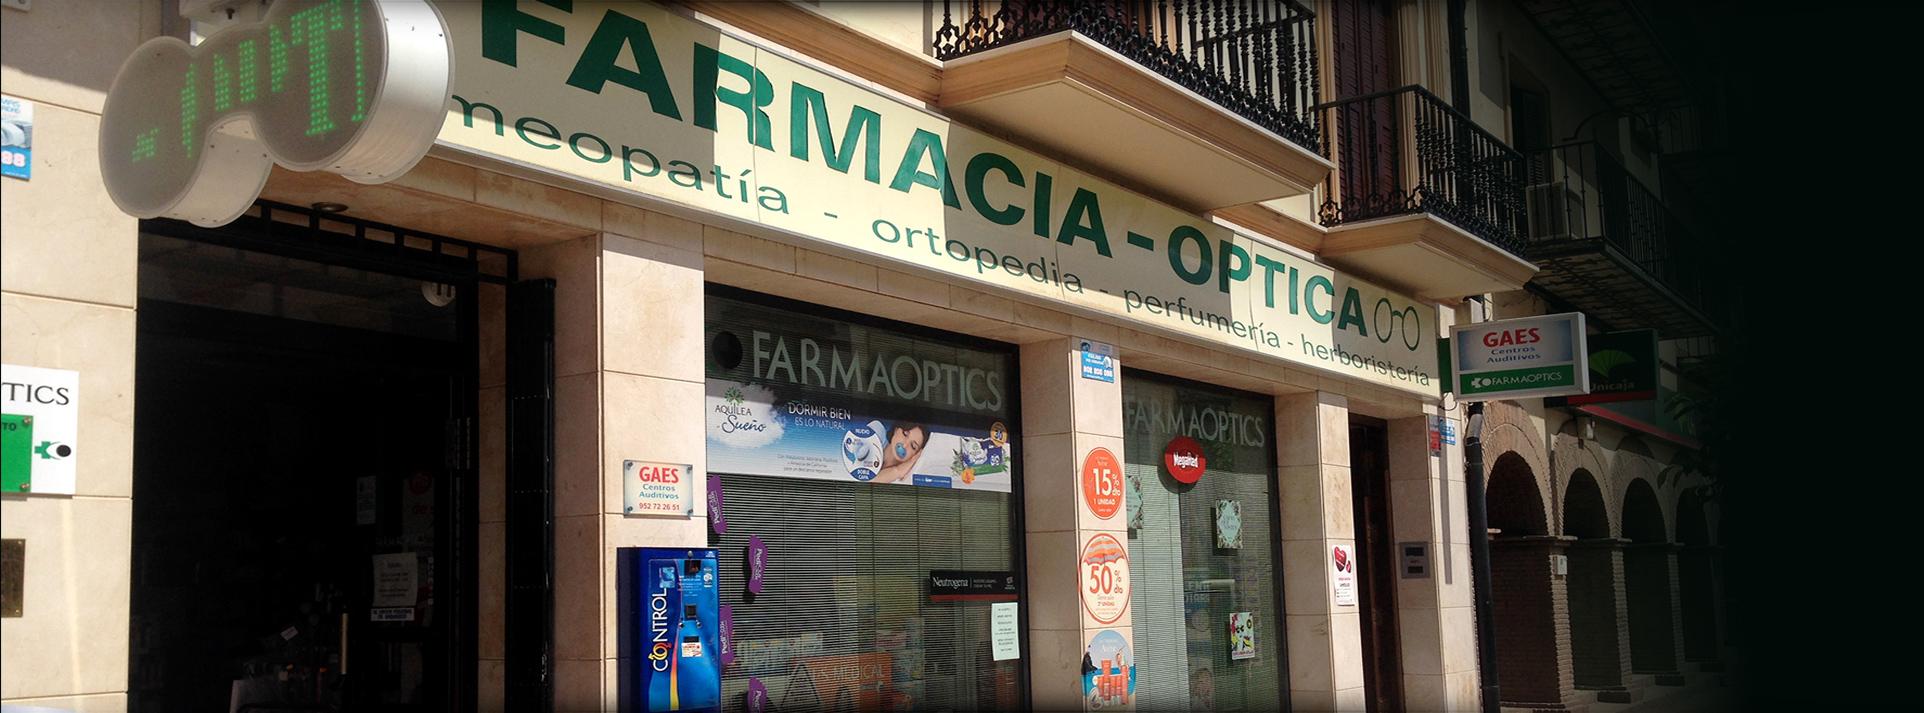 Farmacia Mesa Padilla